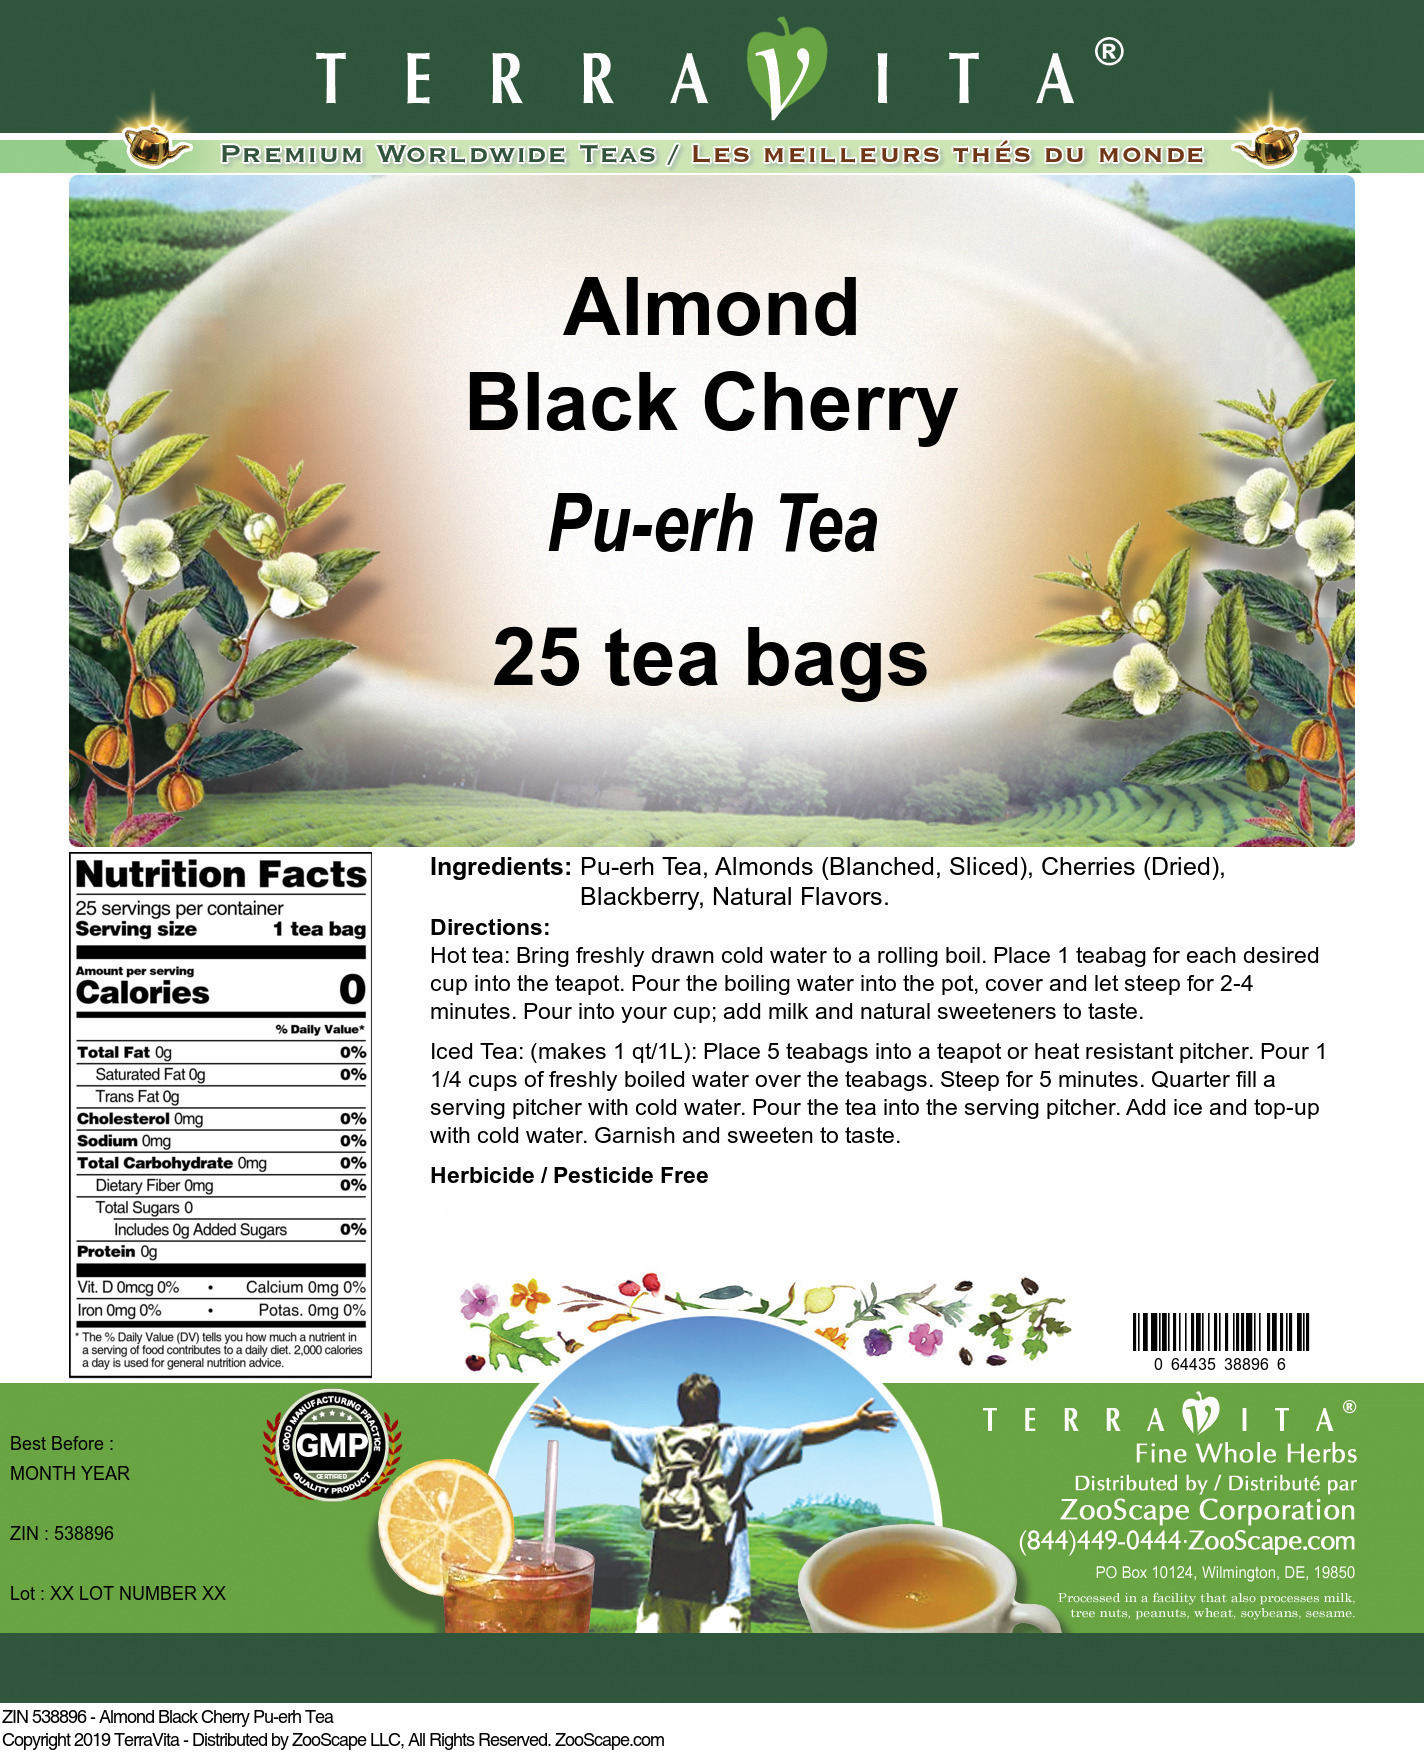 Almond Black Cherry Pu-erh Tea - Label